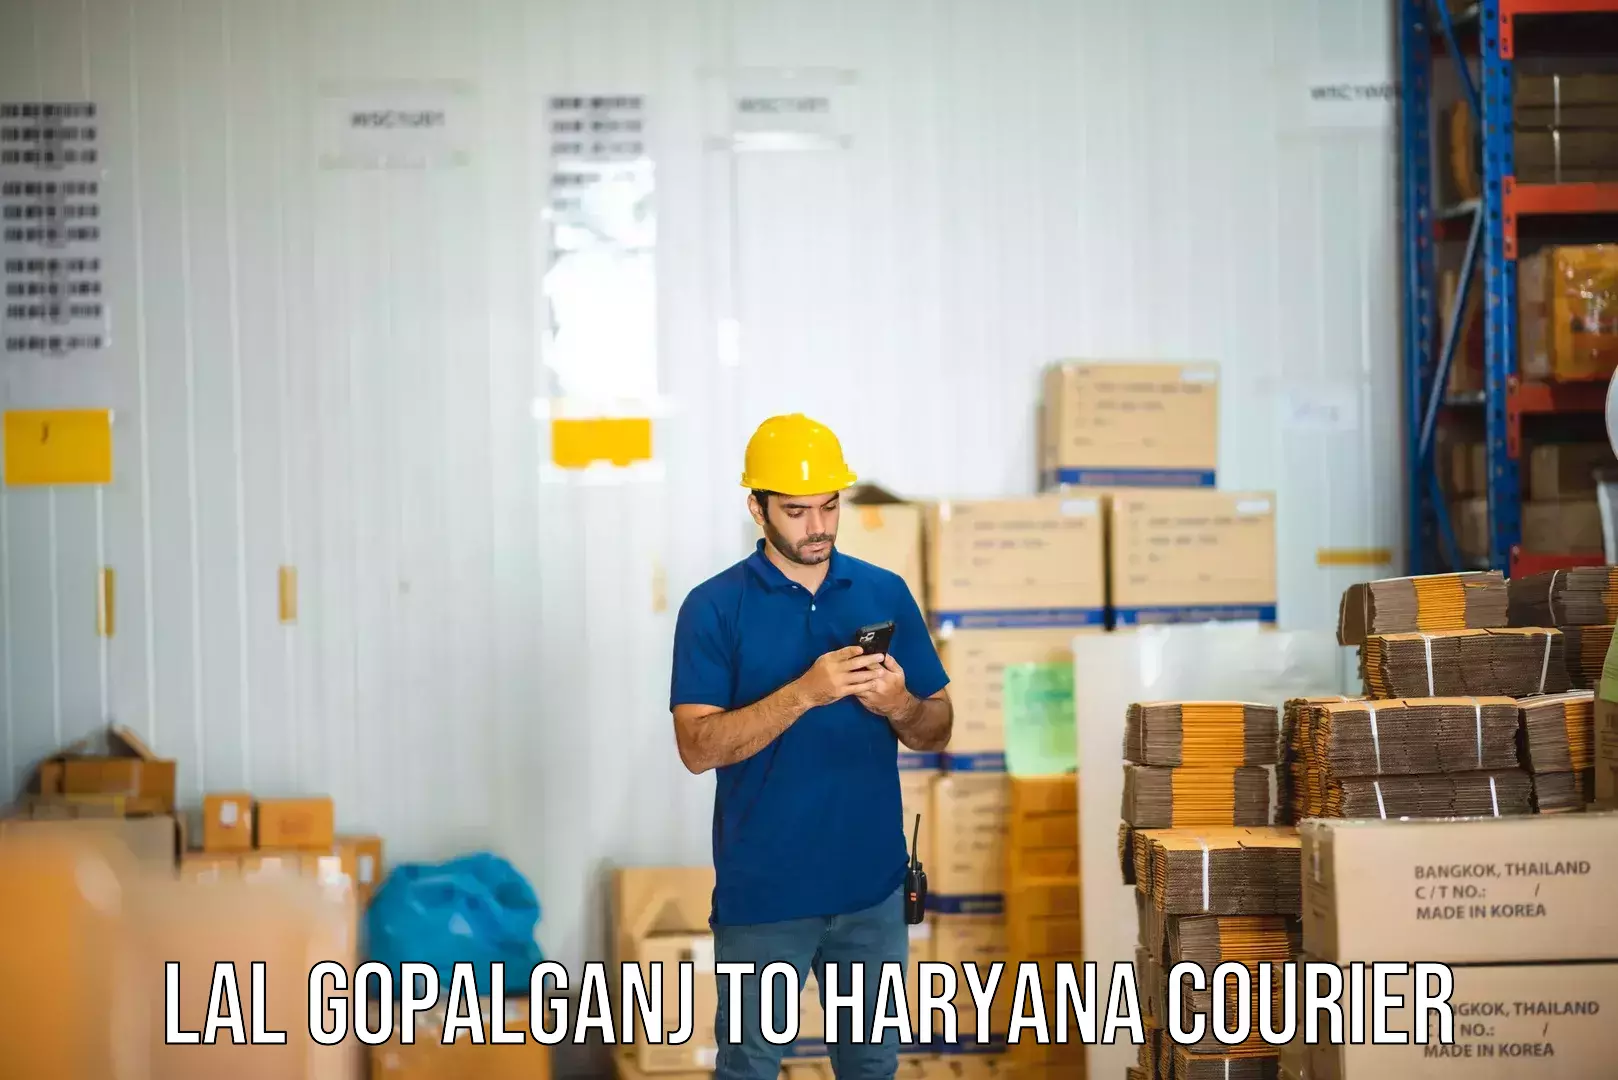 Efficient order fulfillment Lal Gopalganj to Kalanwali